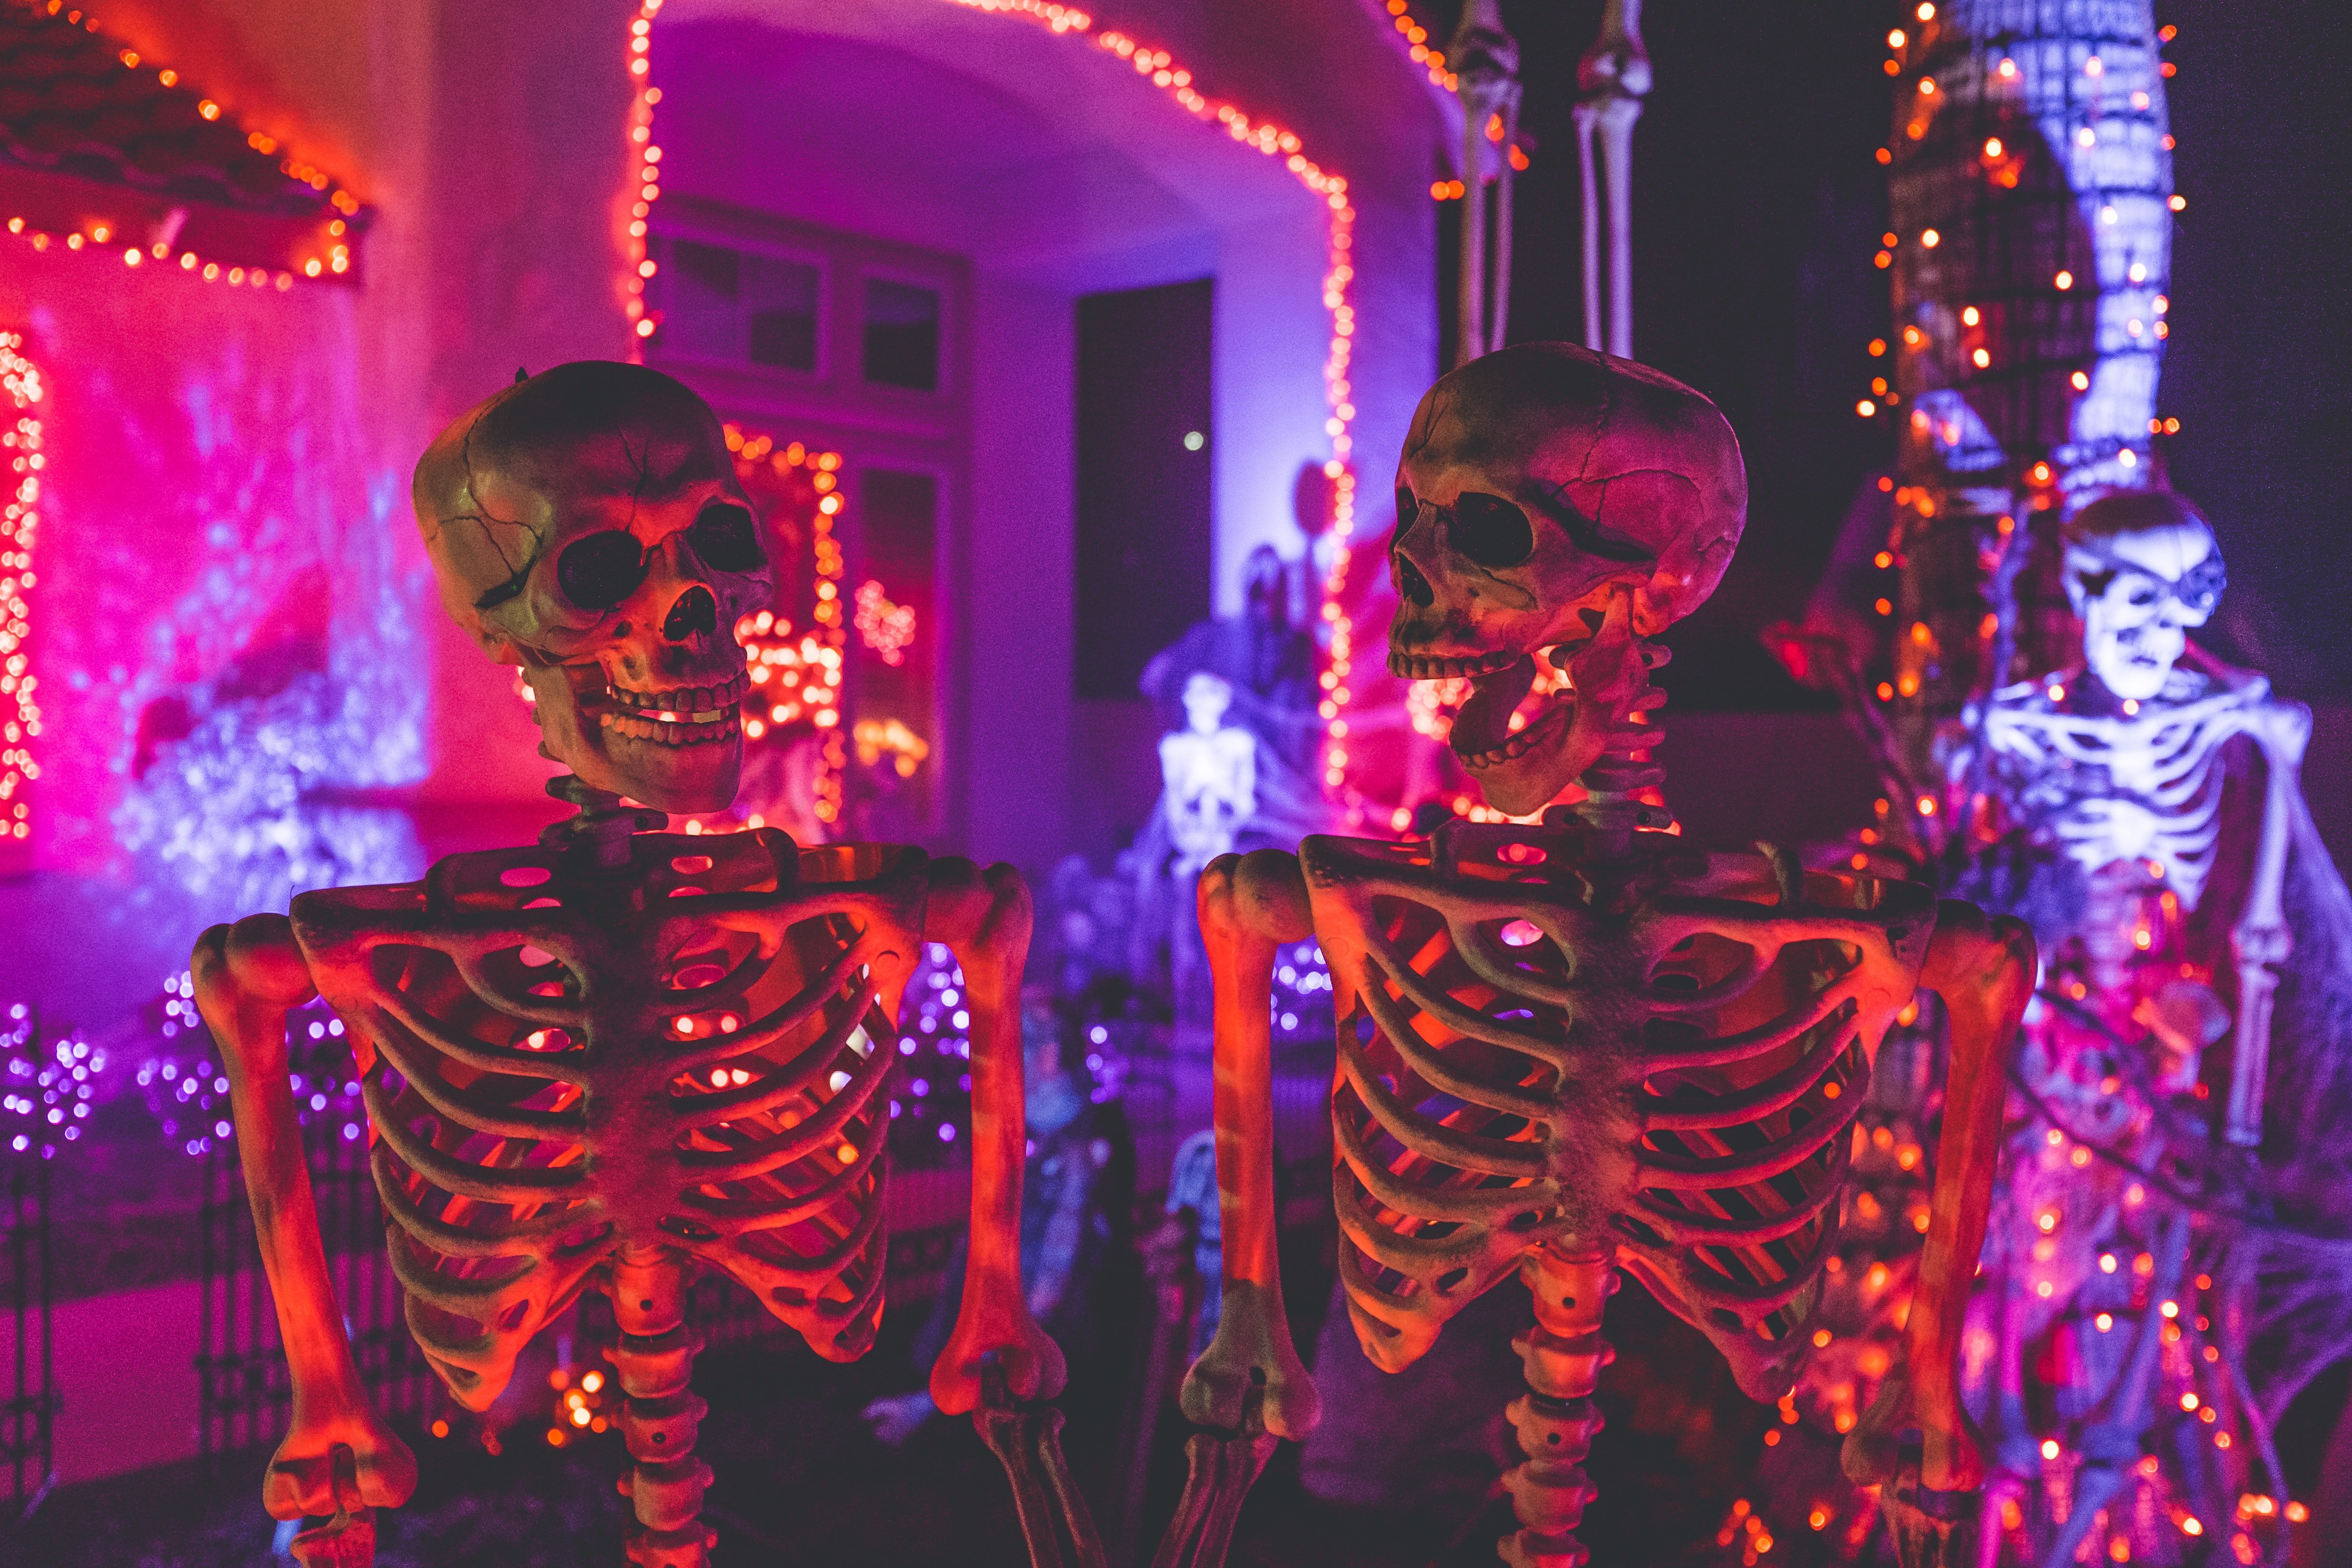 Halloween Skeletons_unsplash no credit needed.jpg